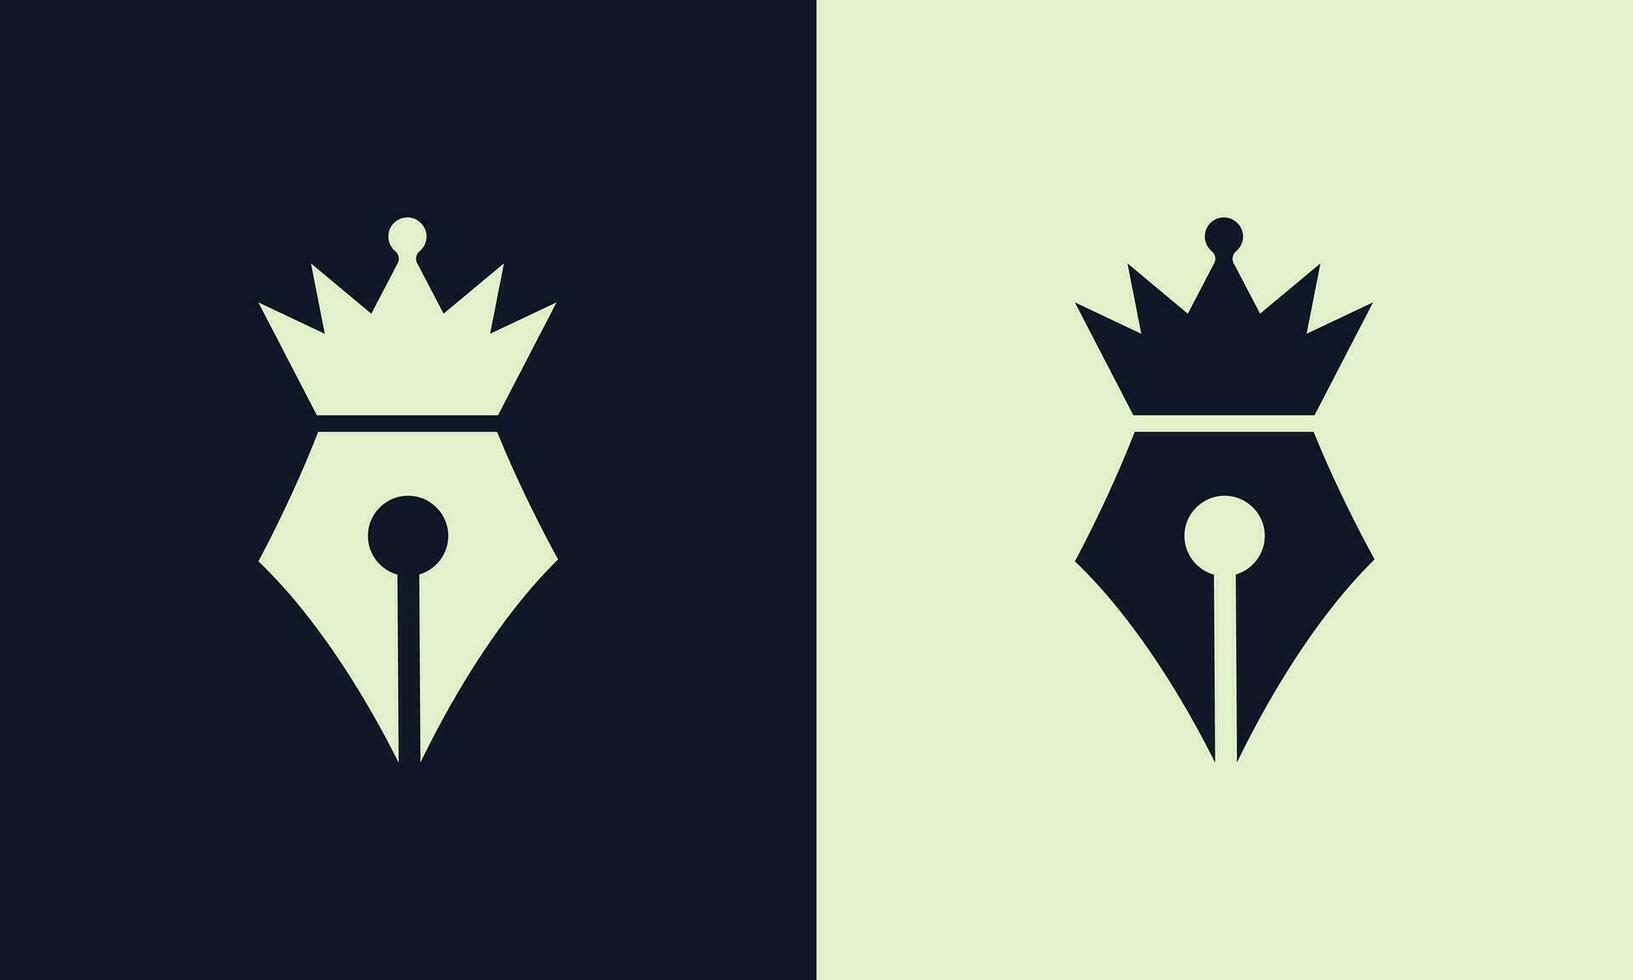 Black pen king logo icon isolated. Pencil vector illustration. Sign of creativity. Creative idea symbol.